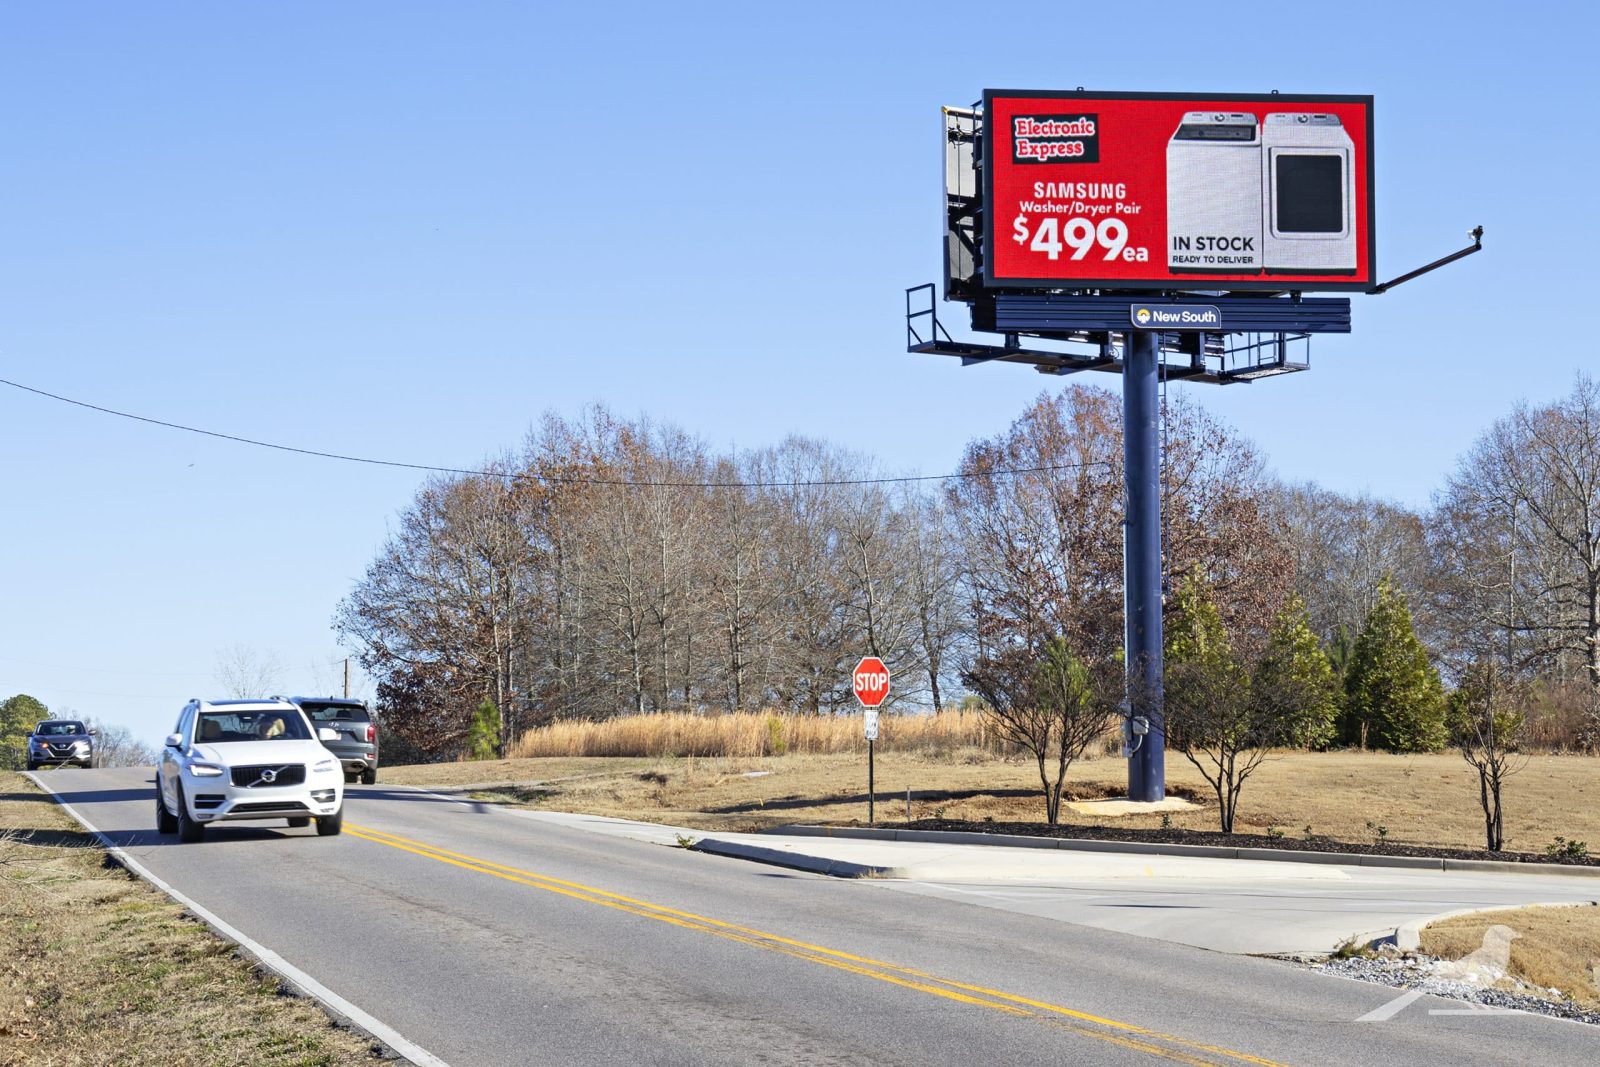 Electronics washing machine billboard on road side